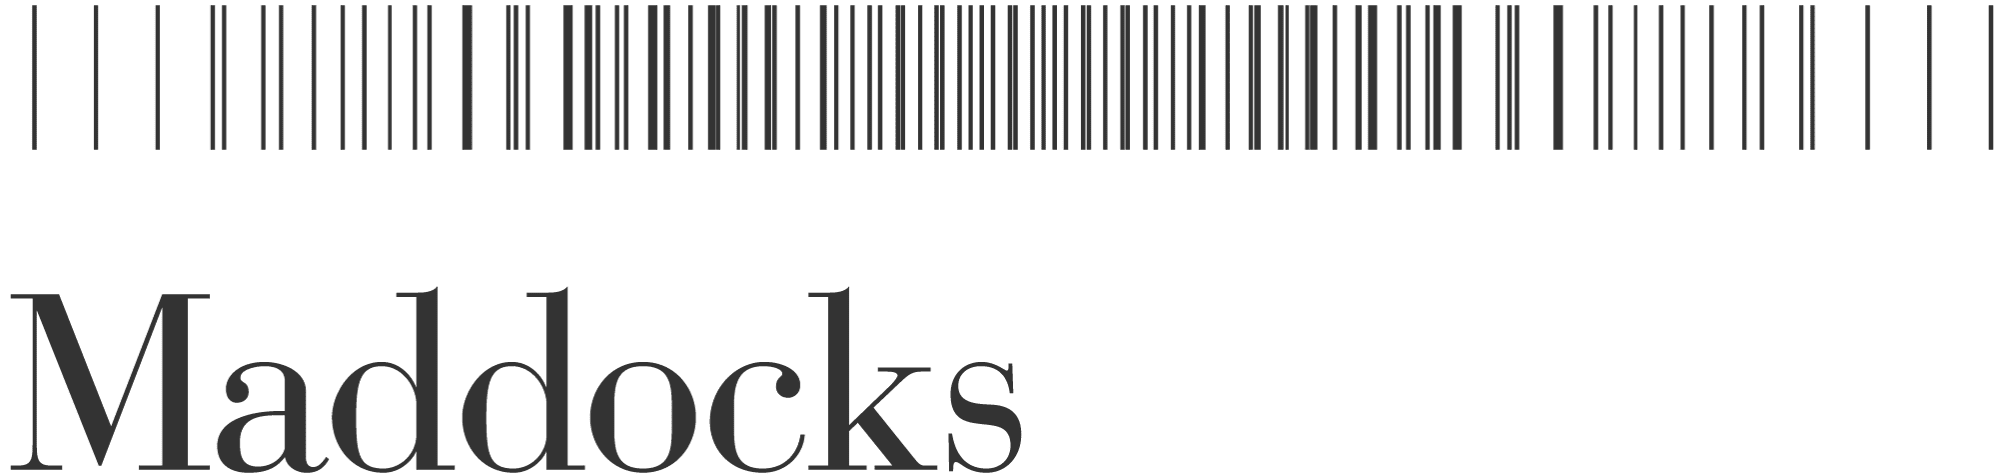 Maddocks-logo